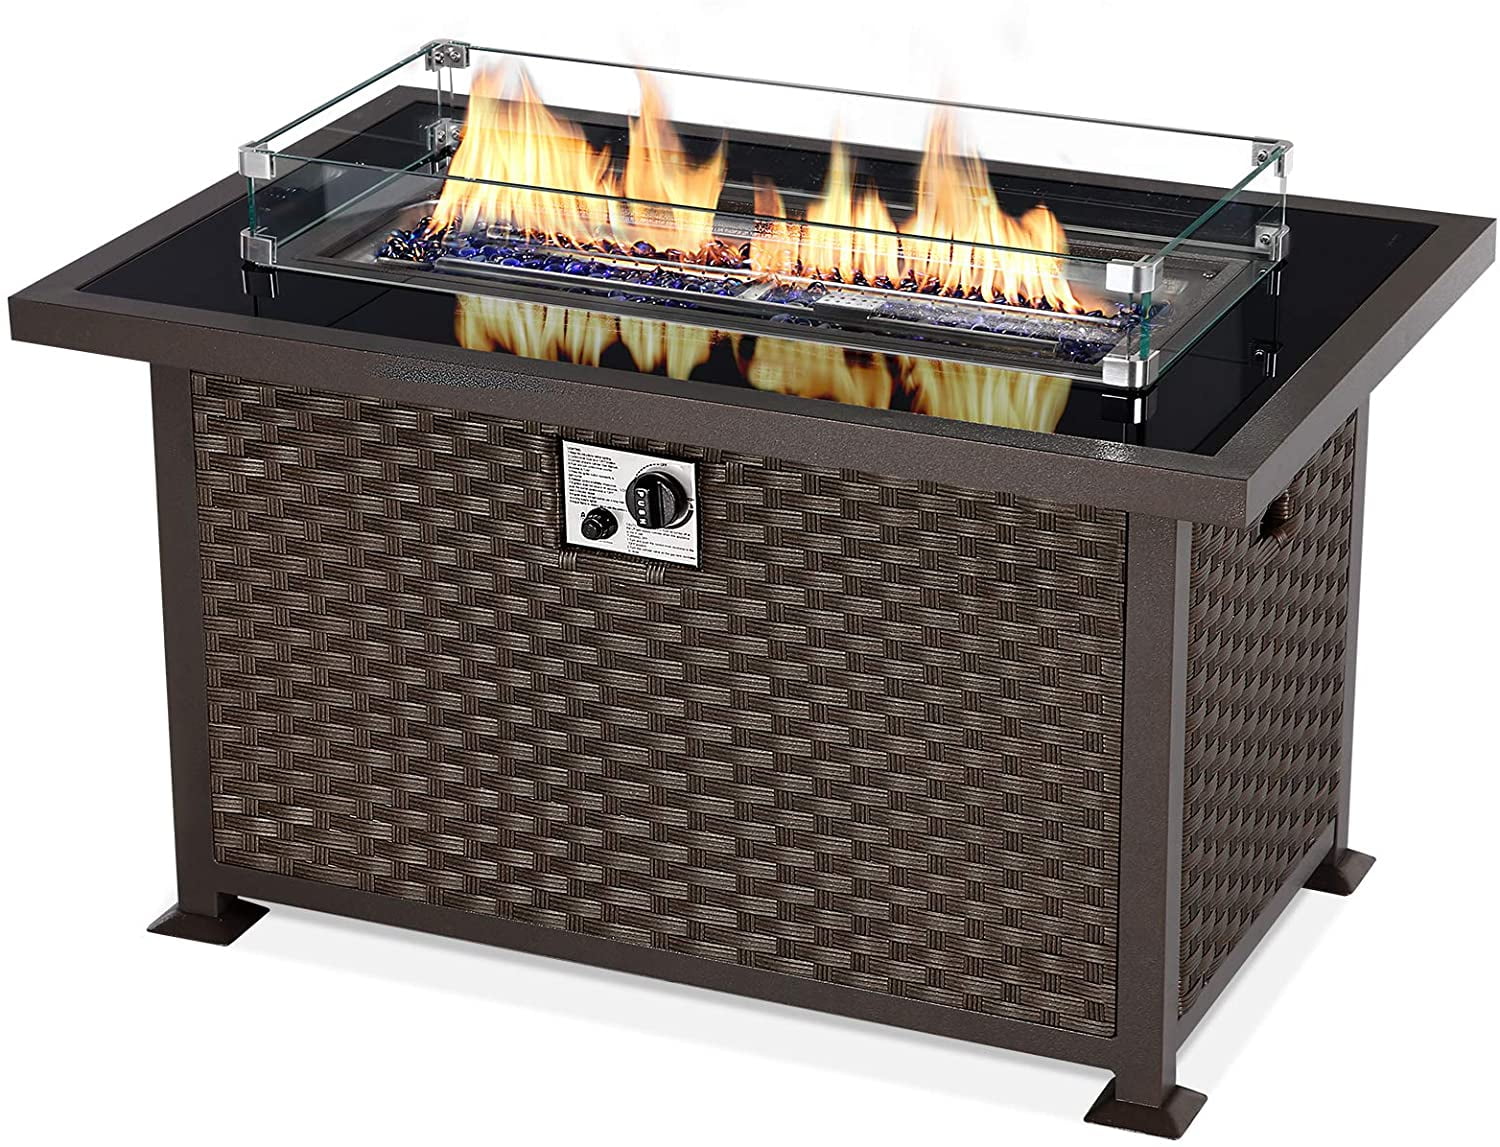 Danrelax 44in Outdoor Propane Gas Fire Pit Table, Brown PE Rattan -  Walmart.com